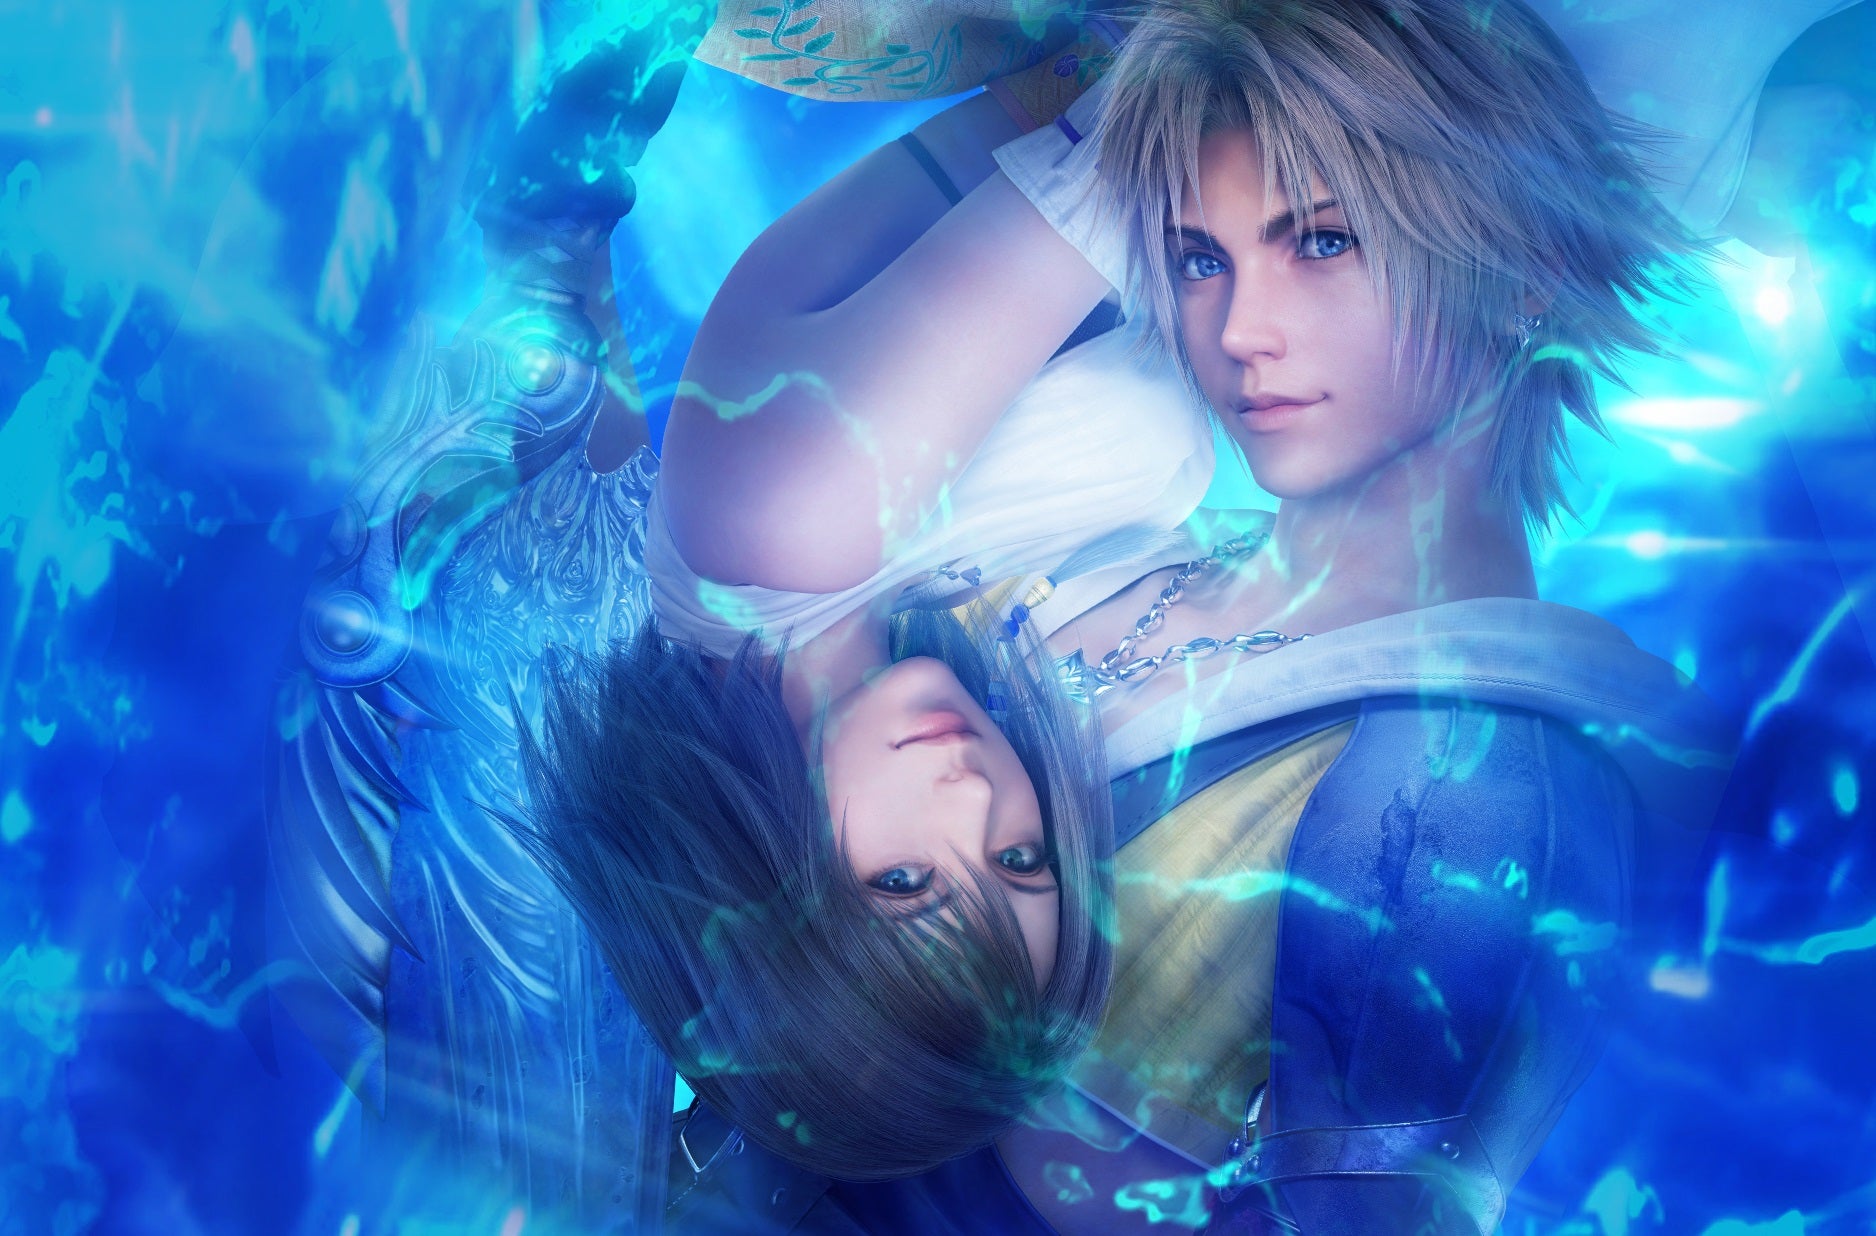 Obrazki dla Final Fantasy 10/10-2 HD Remaster także na PlayStation 4 - raport